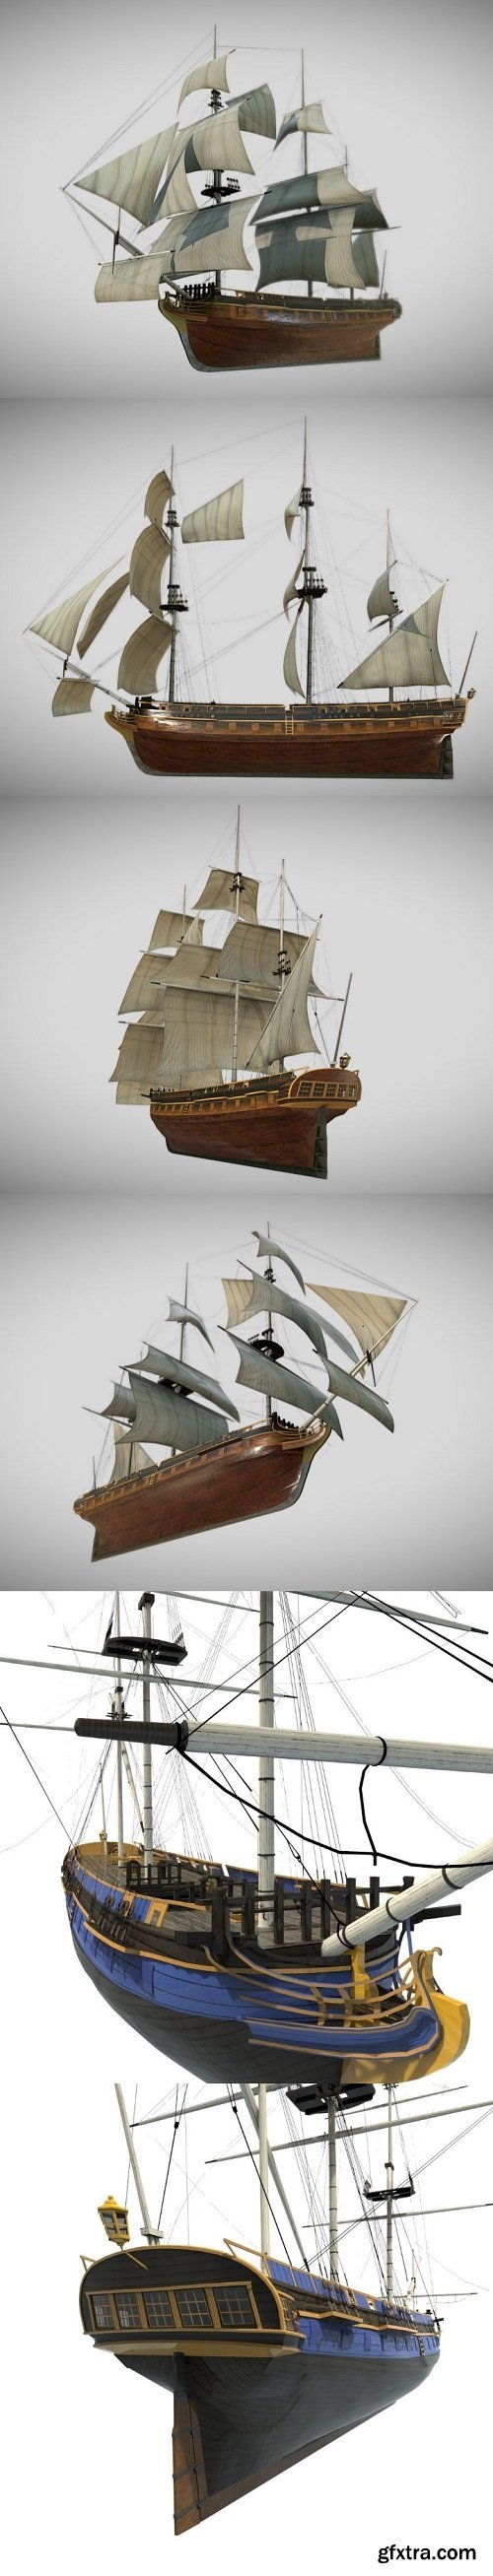 HMS Bounty Low-poly 3D model